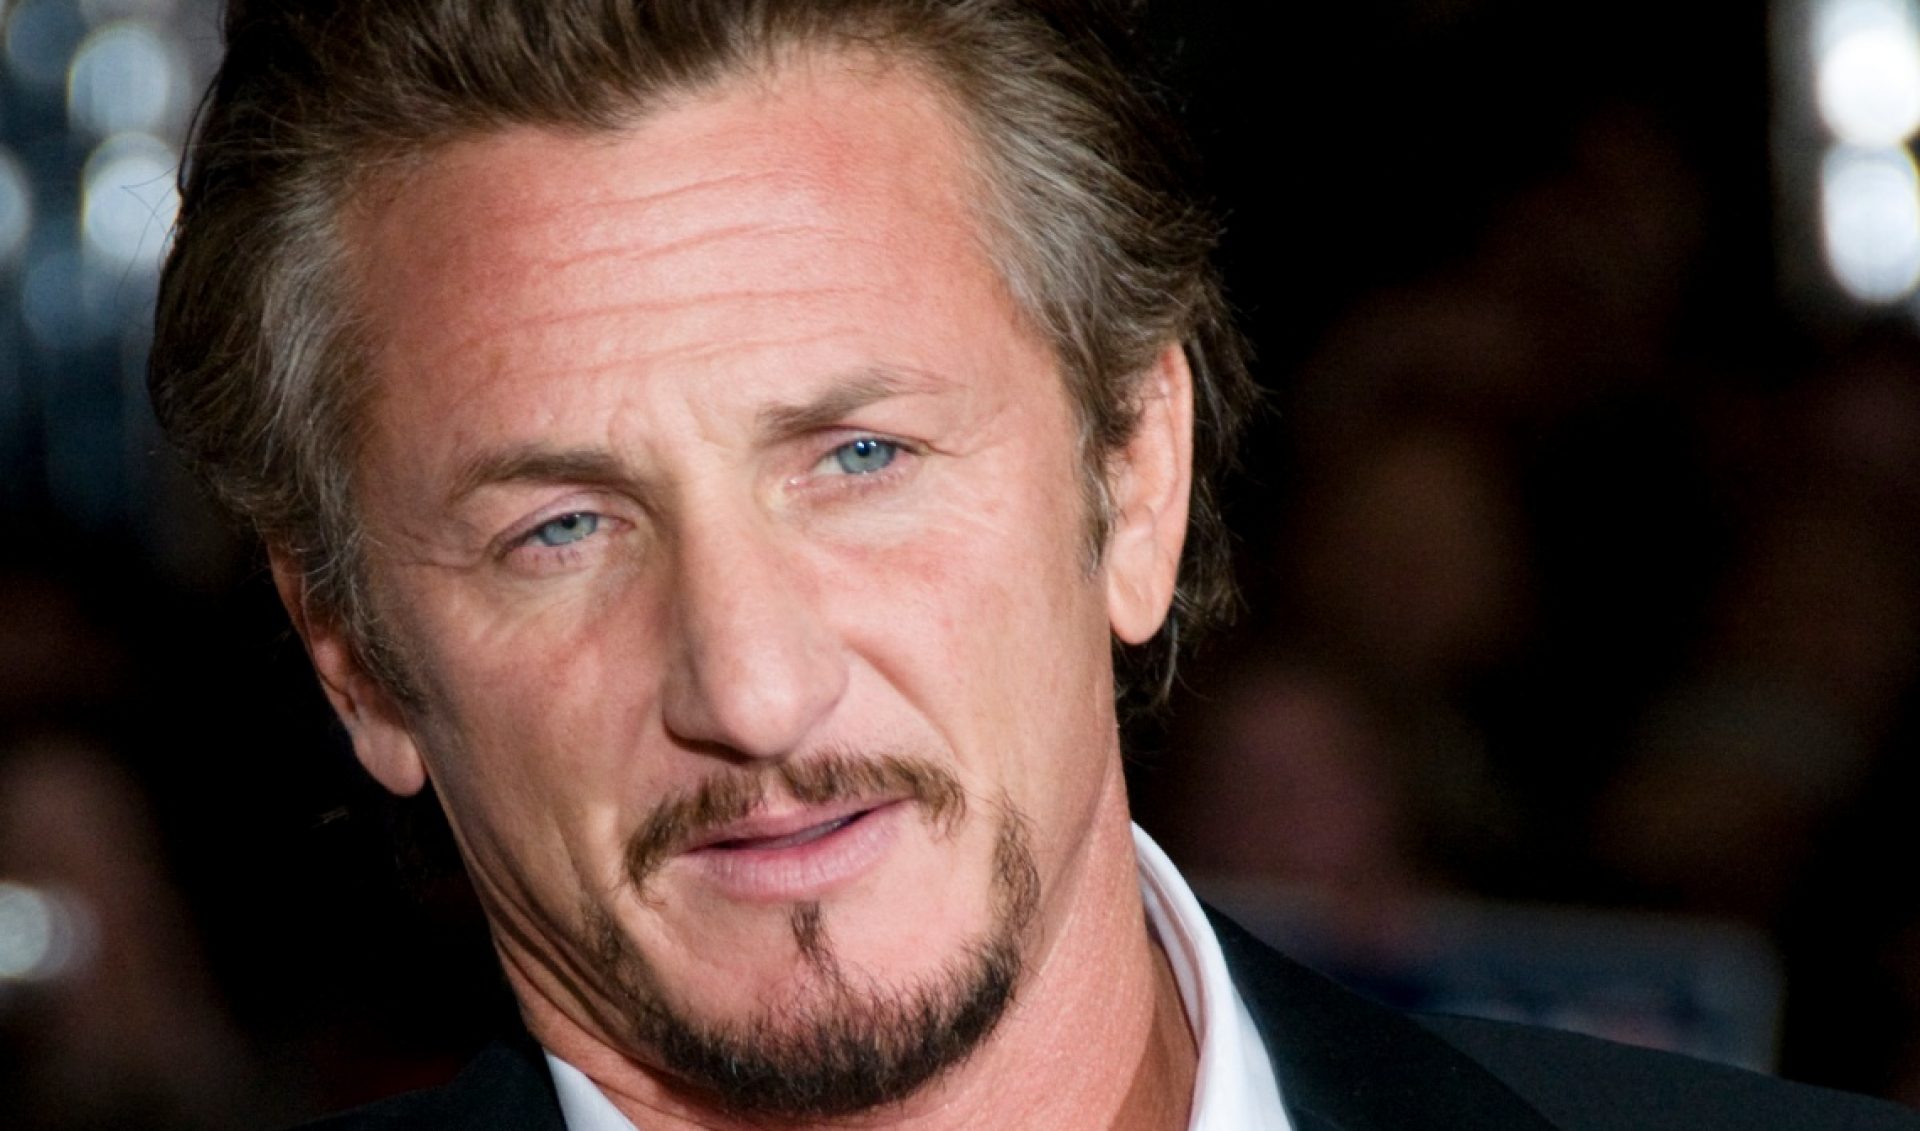 Sean Penn’s First TV Role Will Be In Hulu’s Prestige Drama “The First”